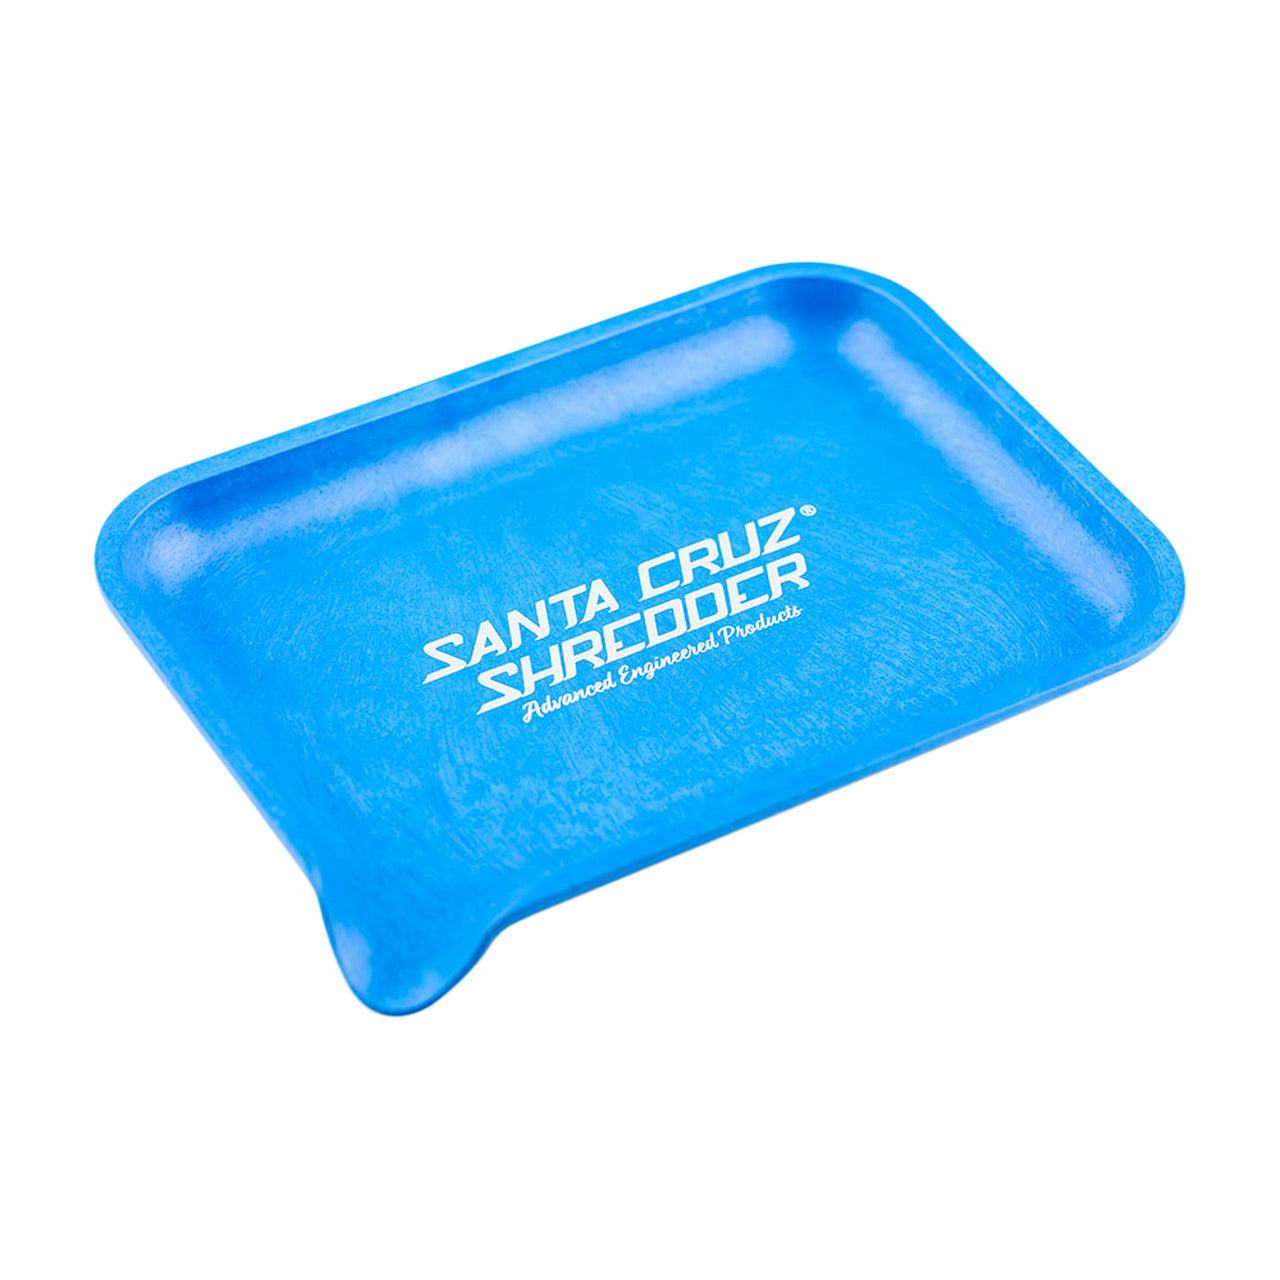 santa cruz shredder hemp rolling tray blue biodegradable